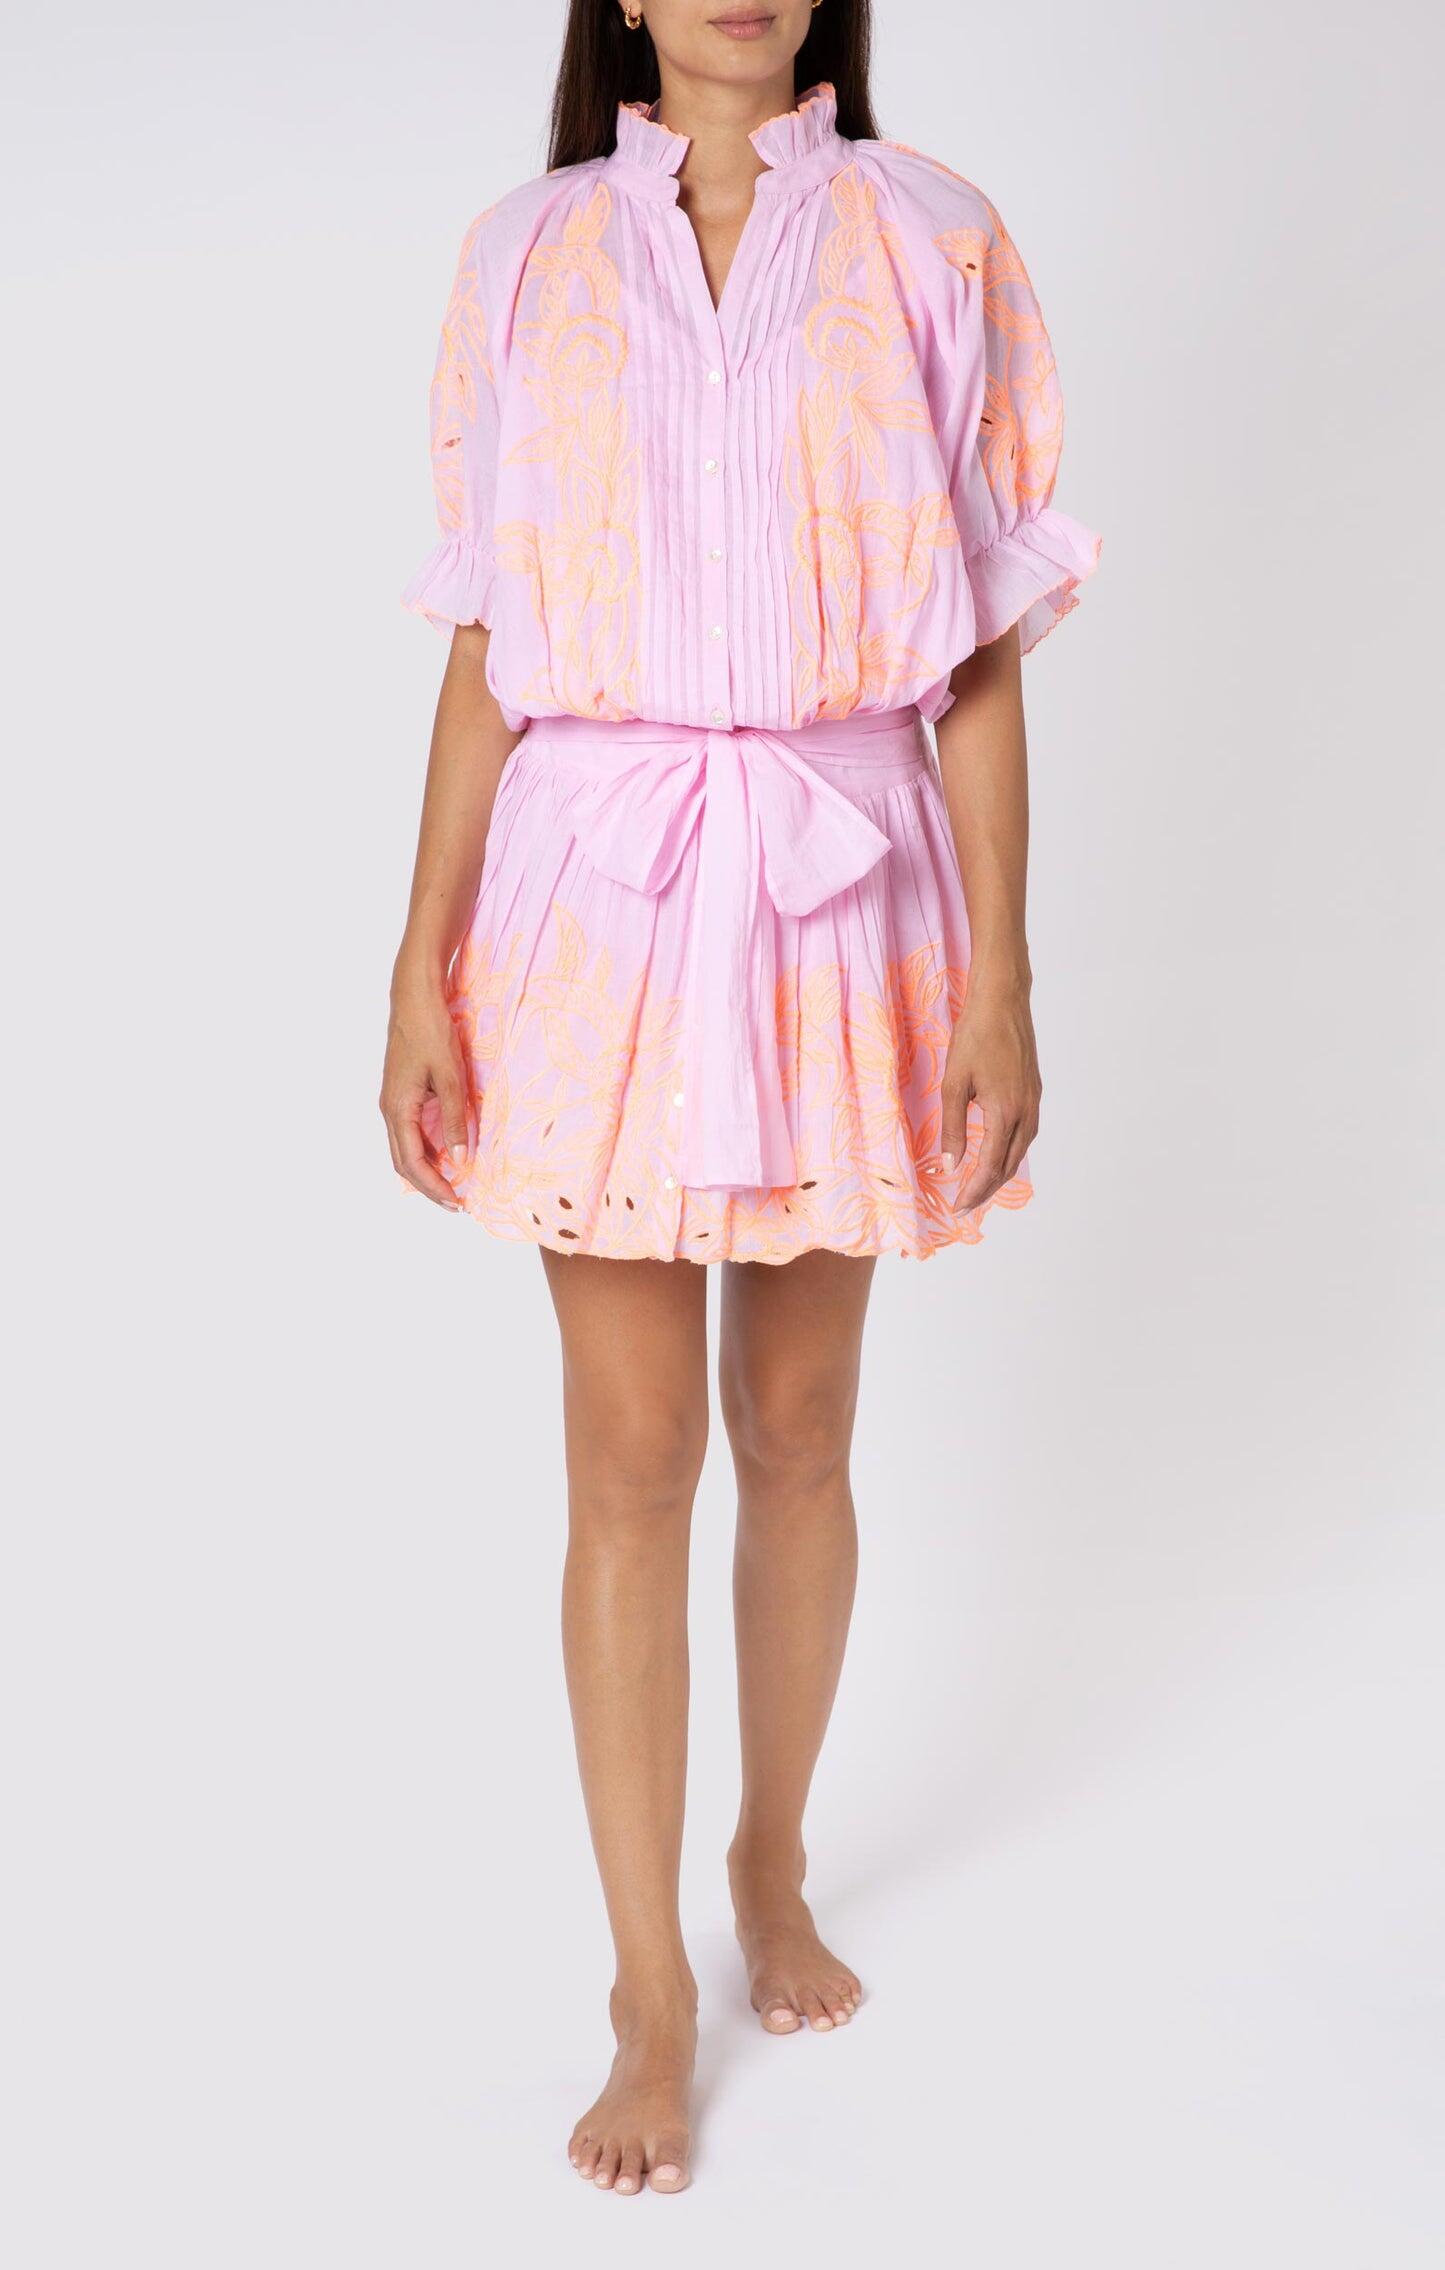 Contrast Cut Out Embro Blouson Dress - With Slip Pale Pink/Neon Peach